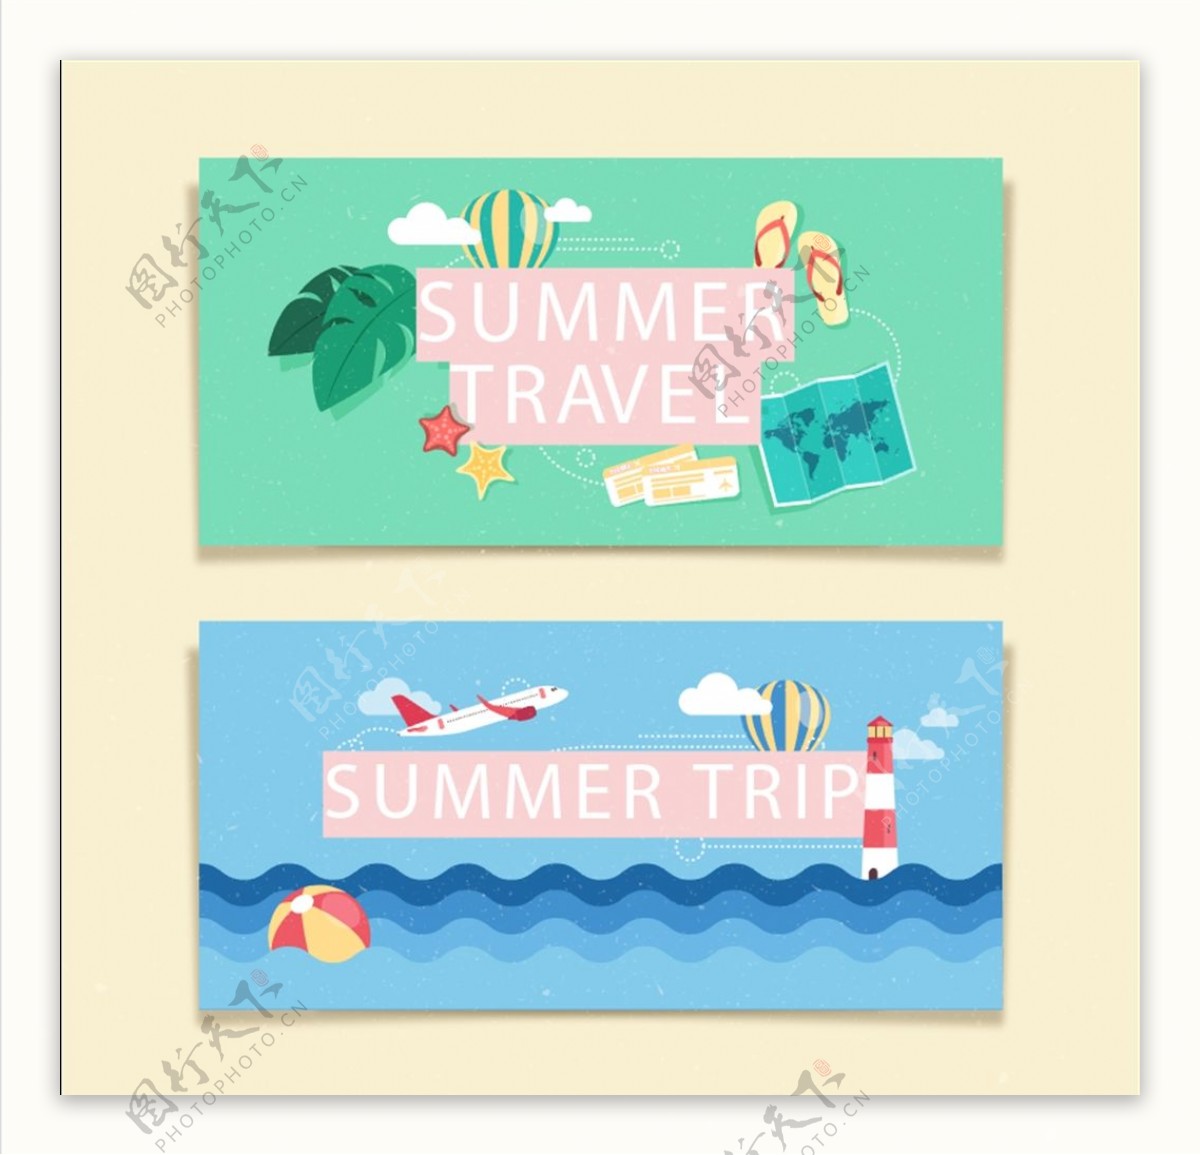 2款夏季旅游banner设计